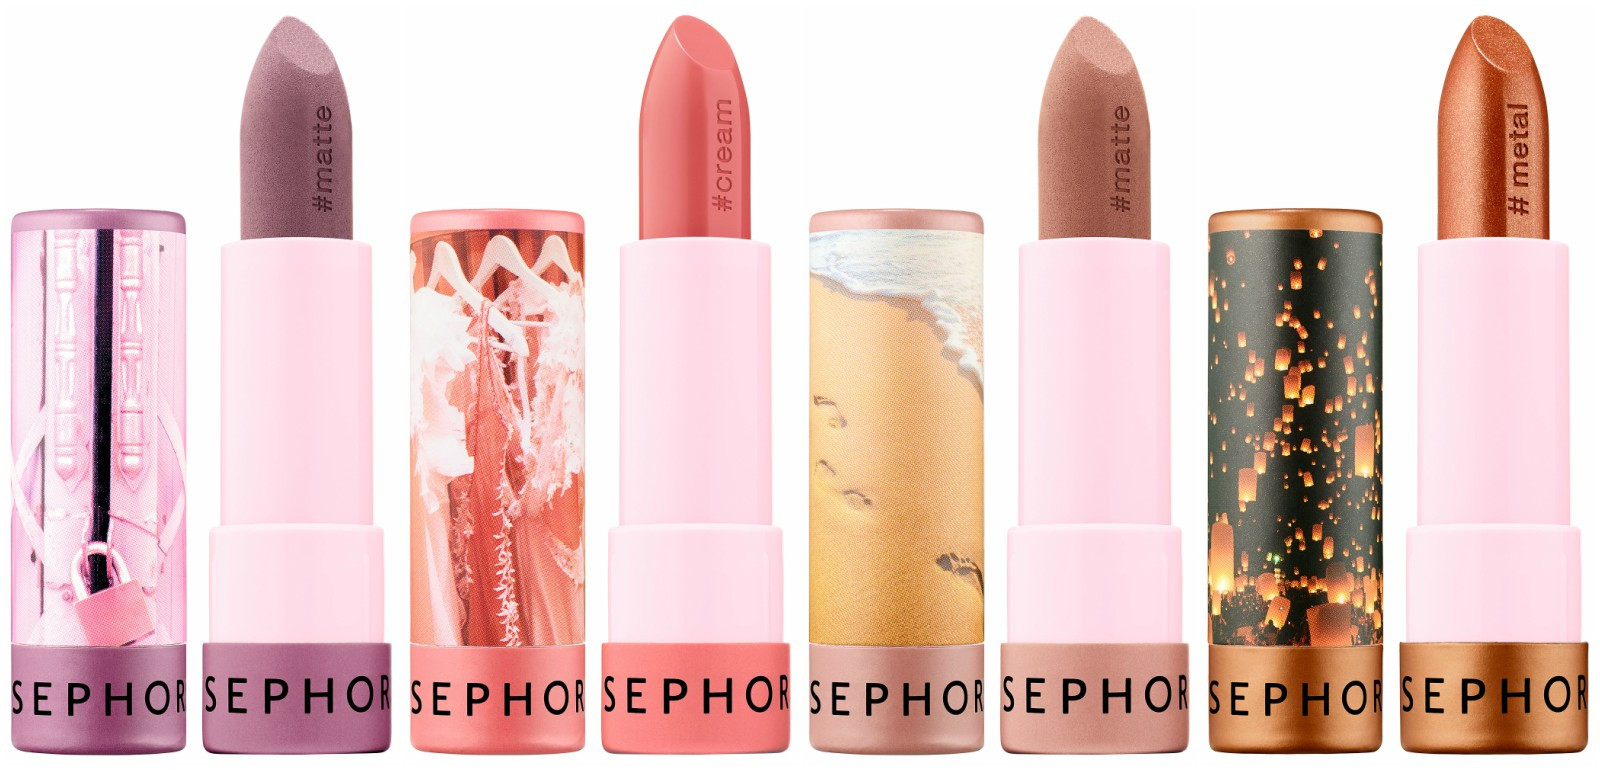 Sephora lipstick collection box